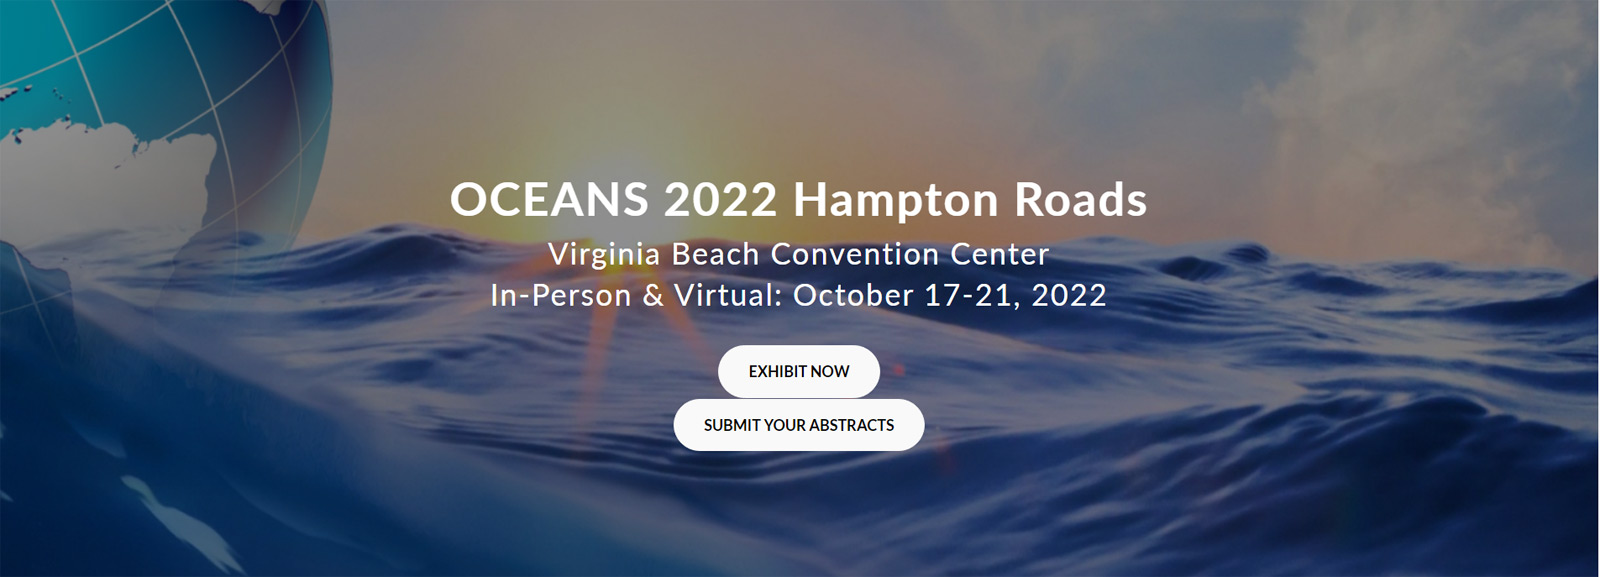 OCEANS 2022 Hampton Roads